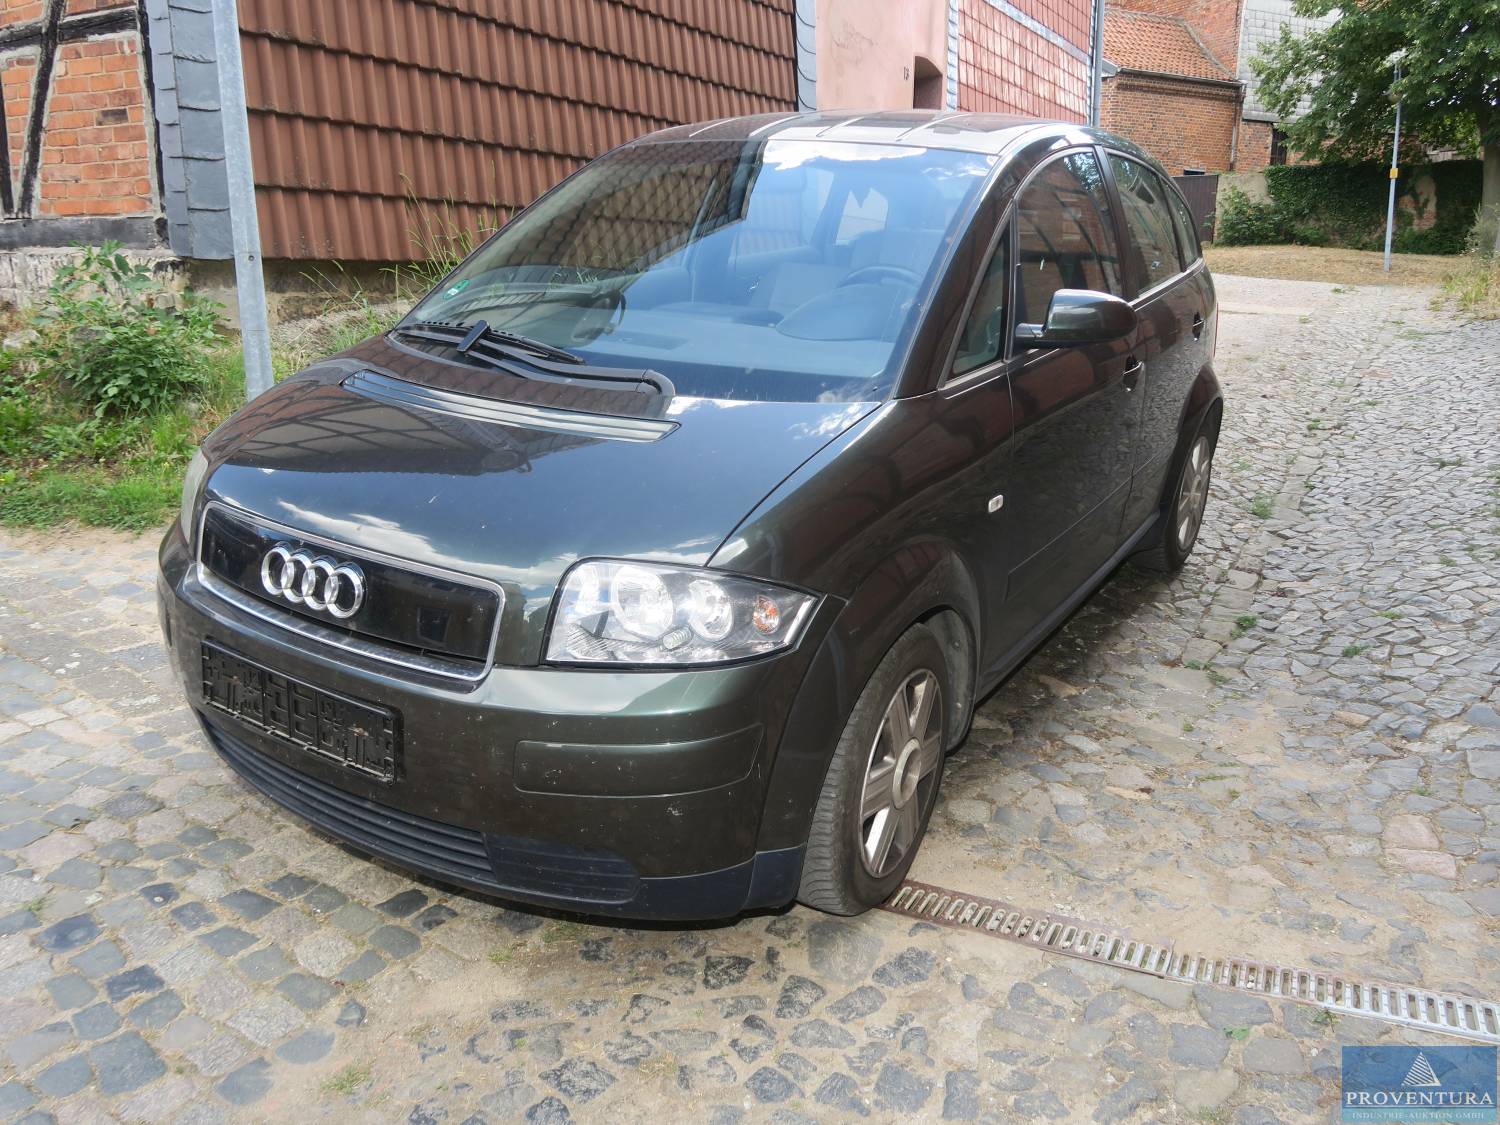 Fahrzeug-Auktion: Pkw AUDI A2, EZ. 2002, ca. 115.000 km